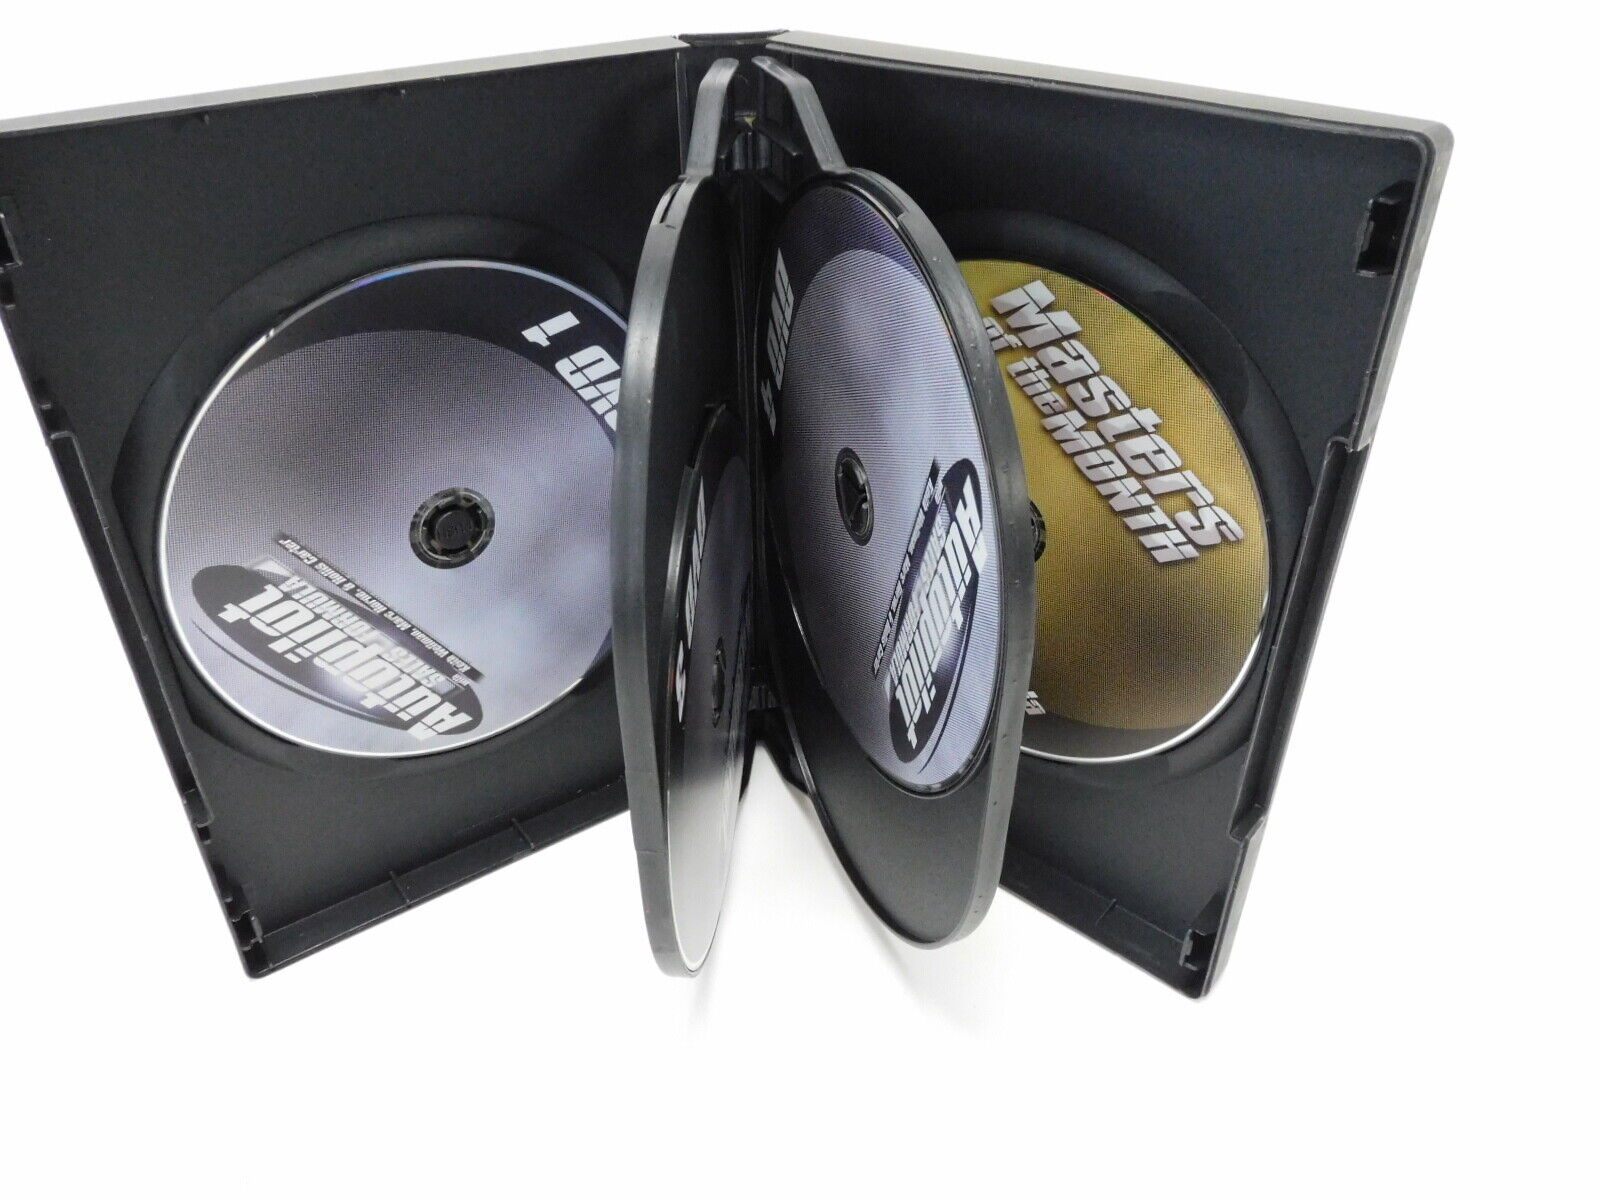 AUTOPILOT SALES FORMULA KEITH WELLMAN VOLUME 1-6 DVD 2008 FX MARKETING Does Not Apply